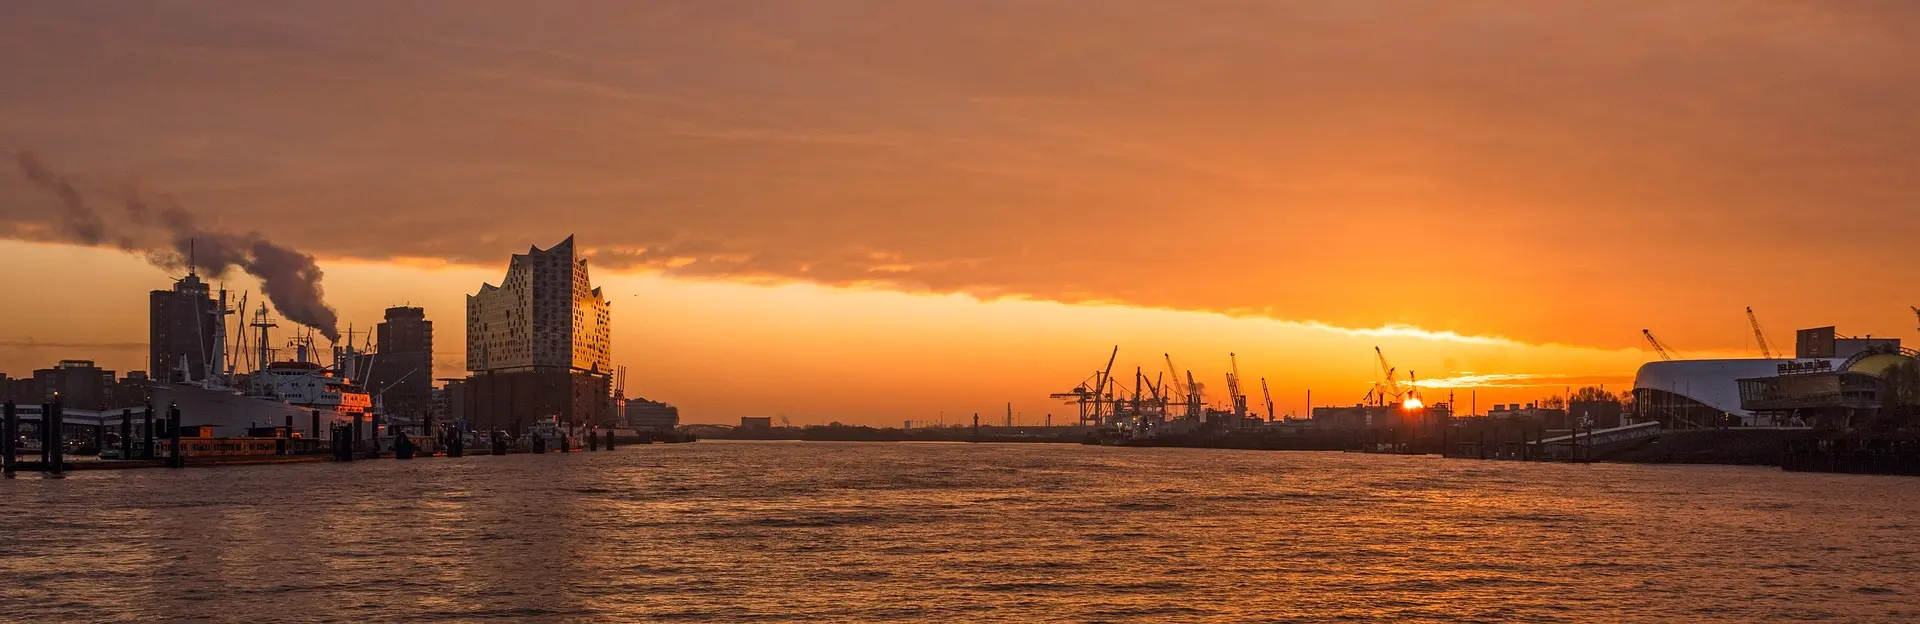 Sonnenuntergang am Hamburger Hafen.